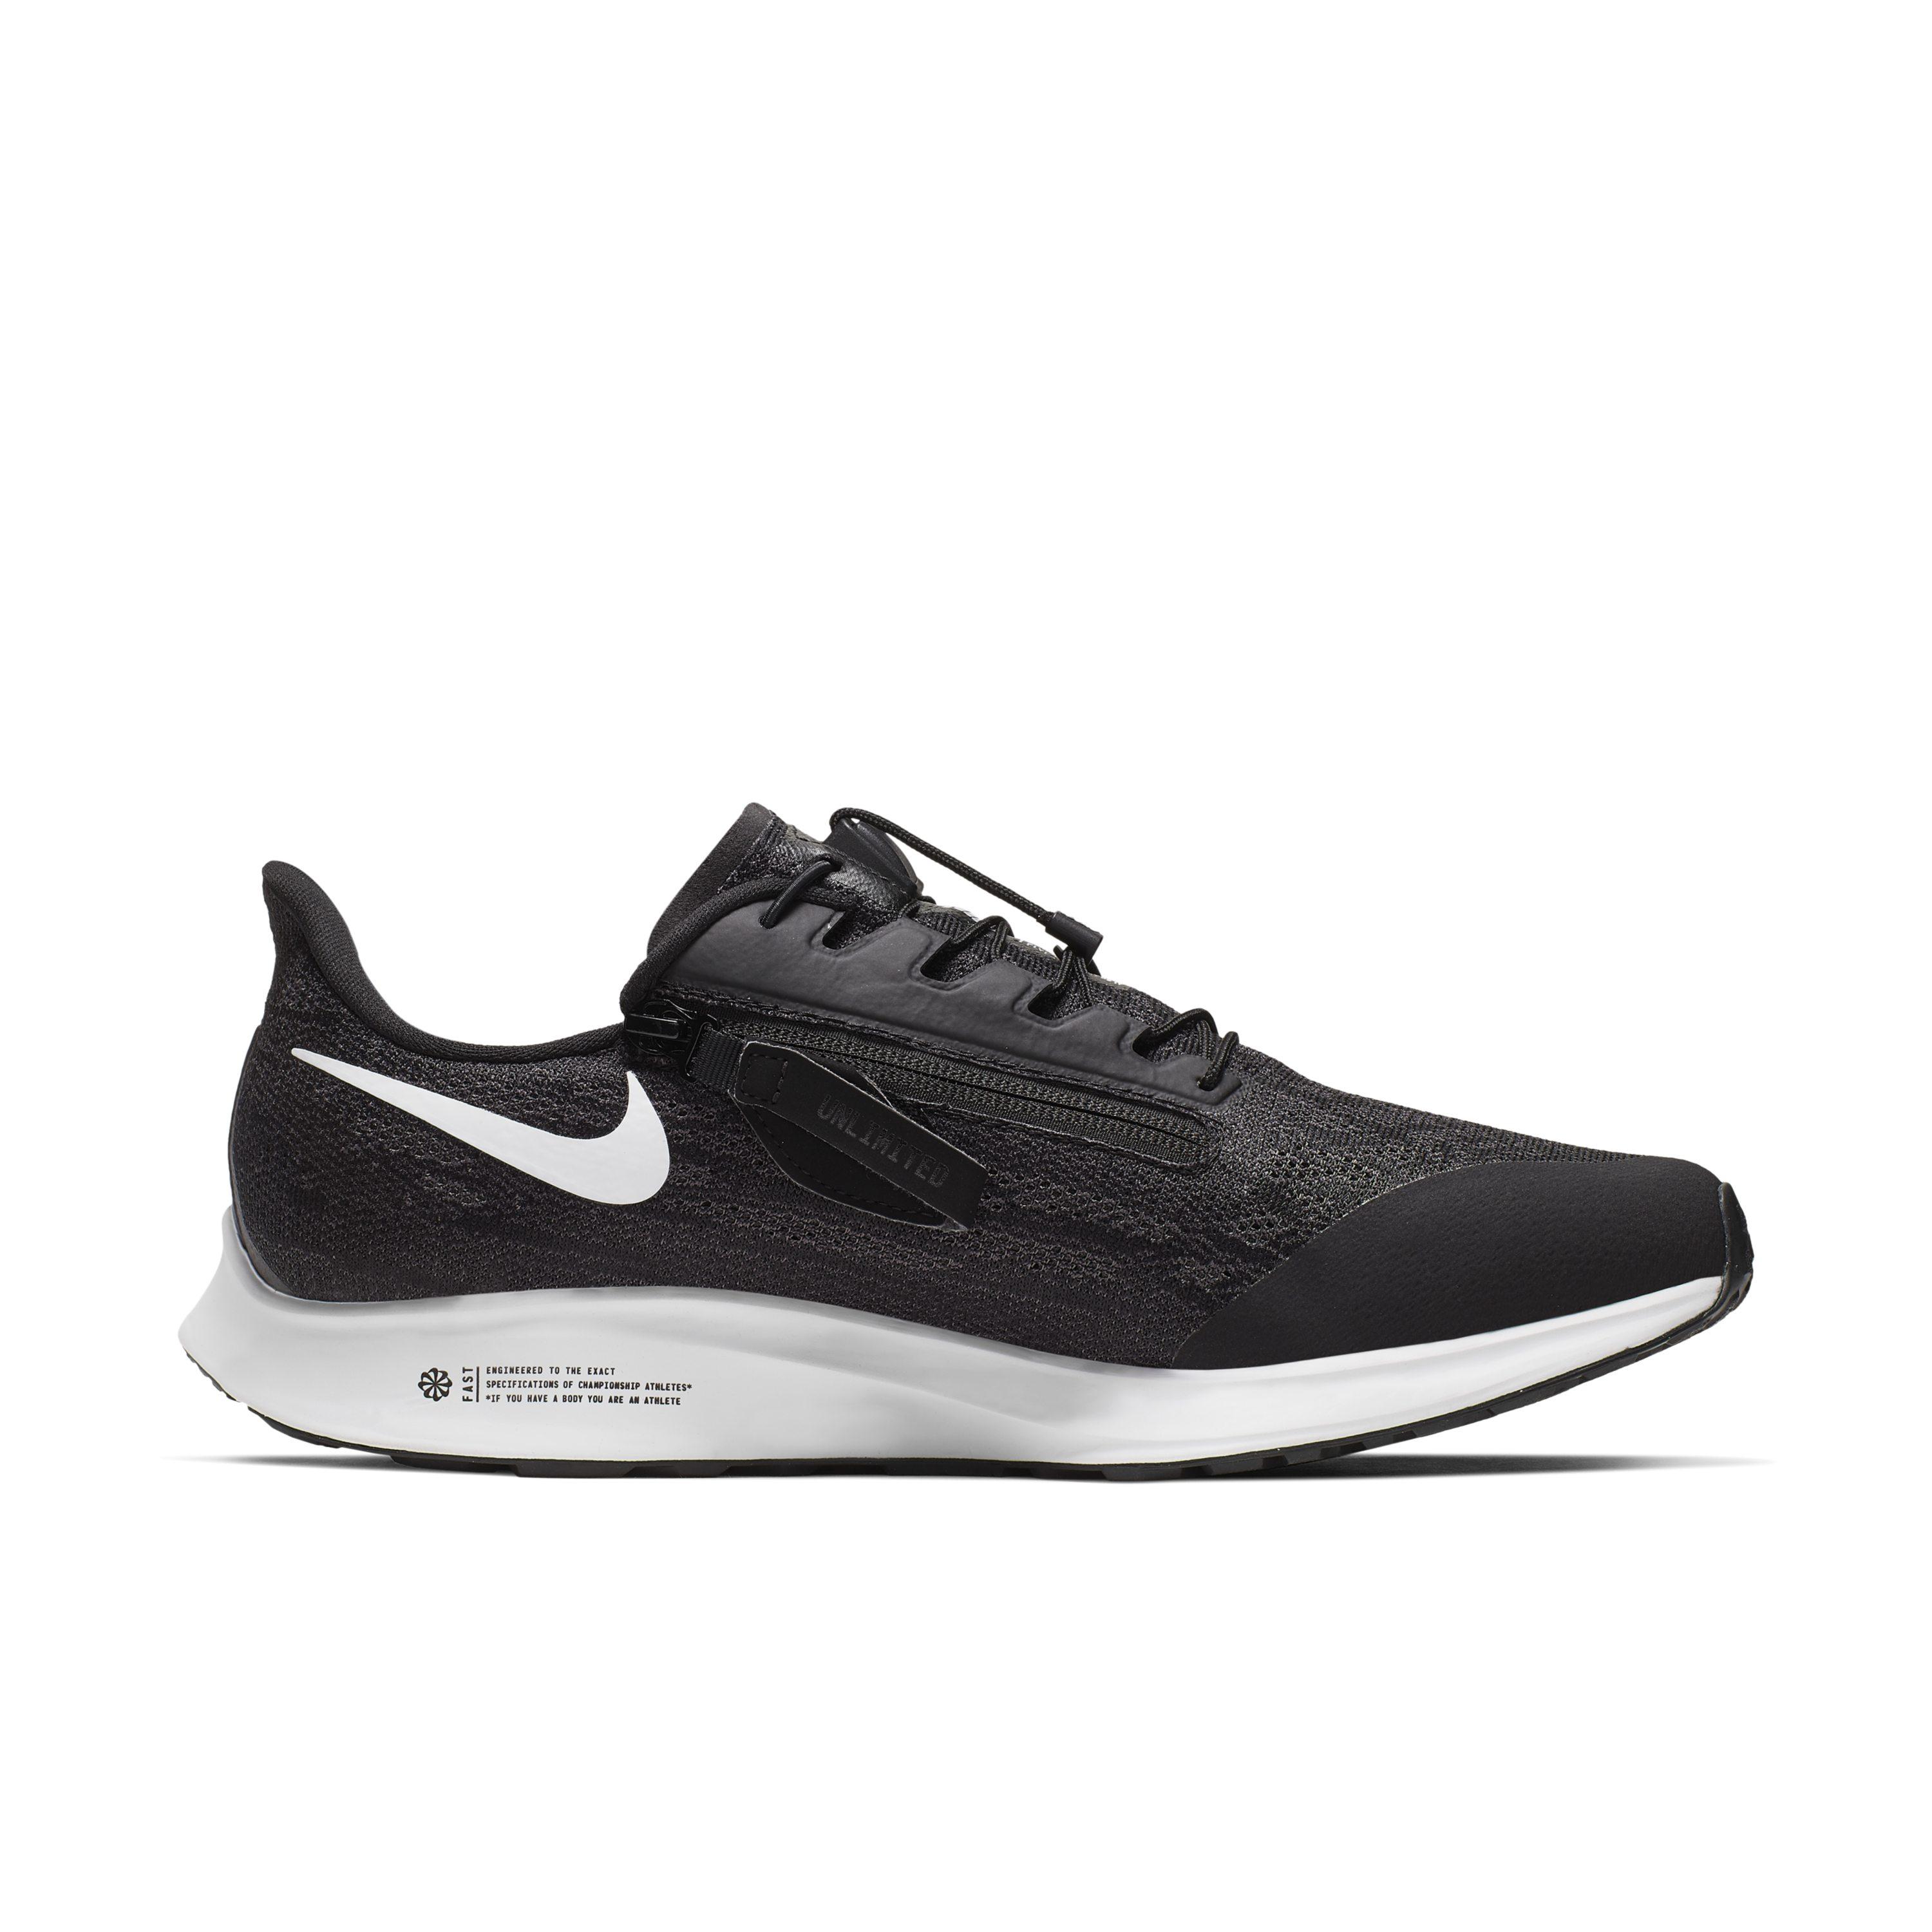 Nike Pegasus 36 Flyease (extra Wide) Running Shoe in Black for Men - Lyst